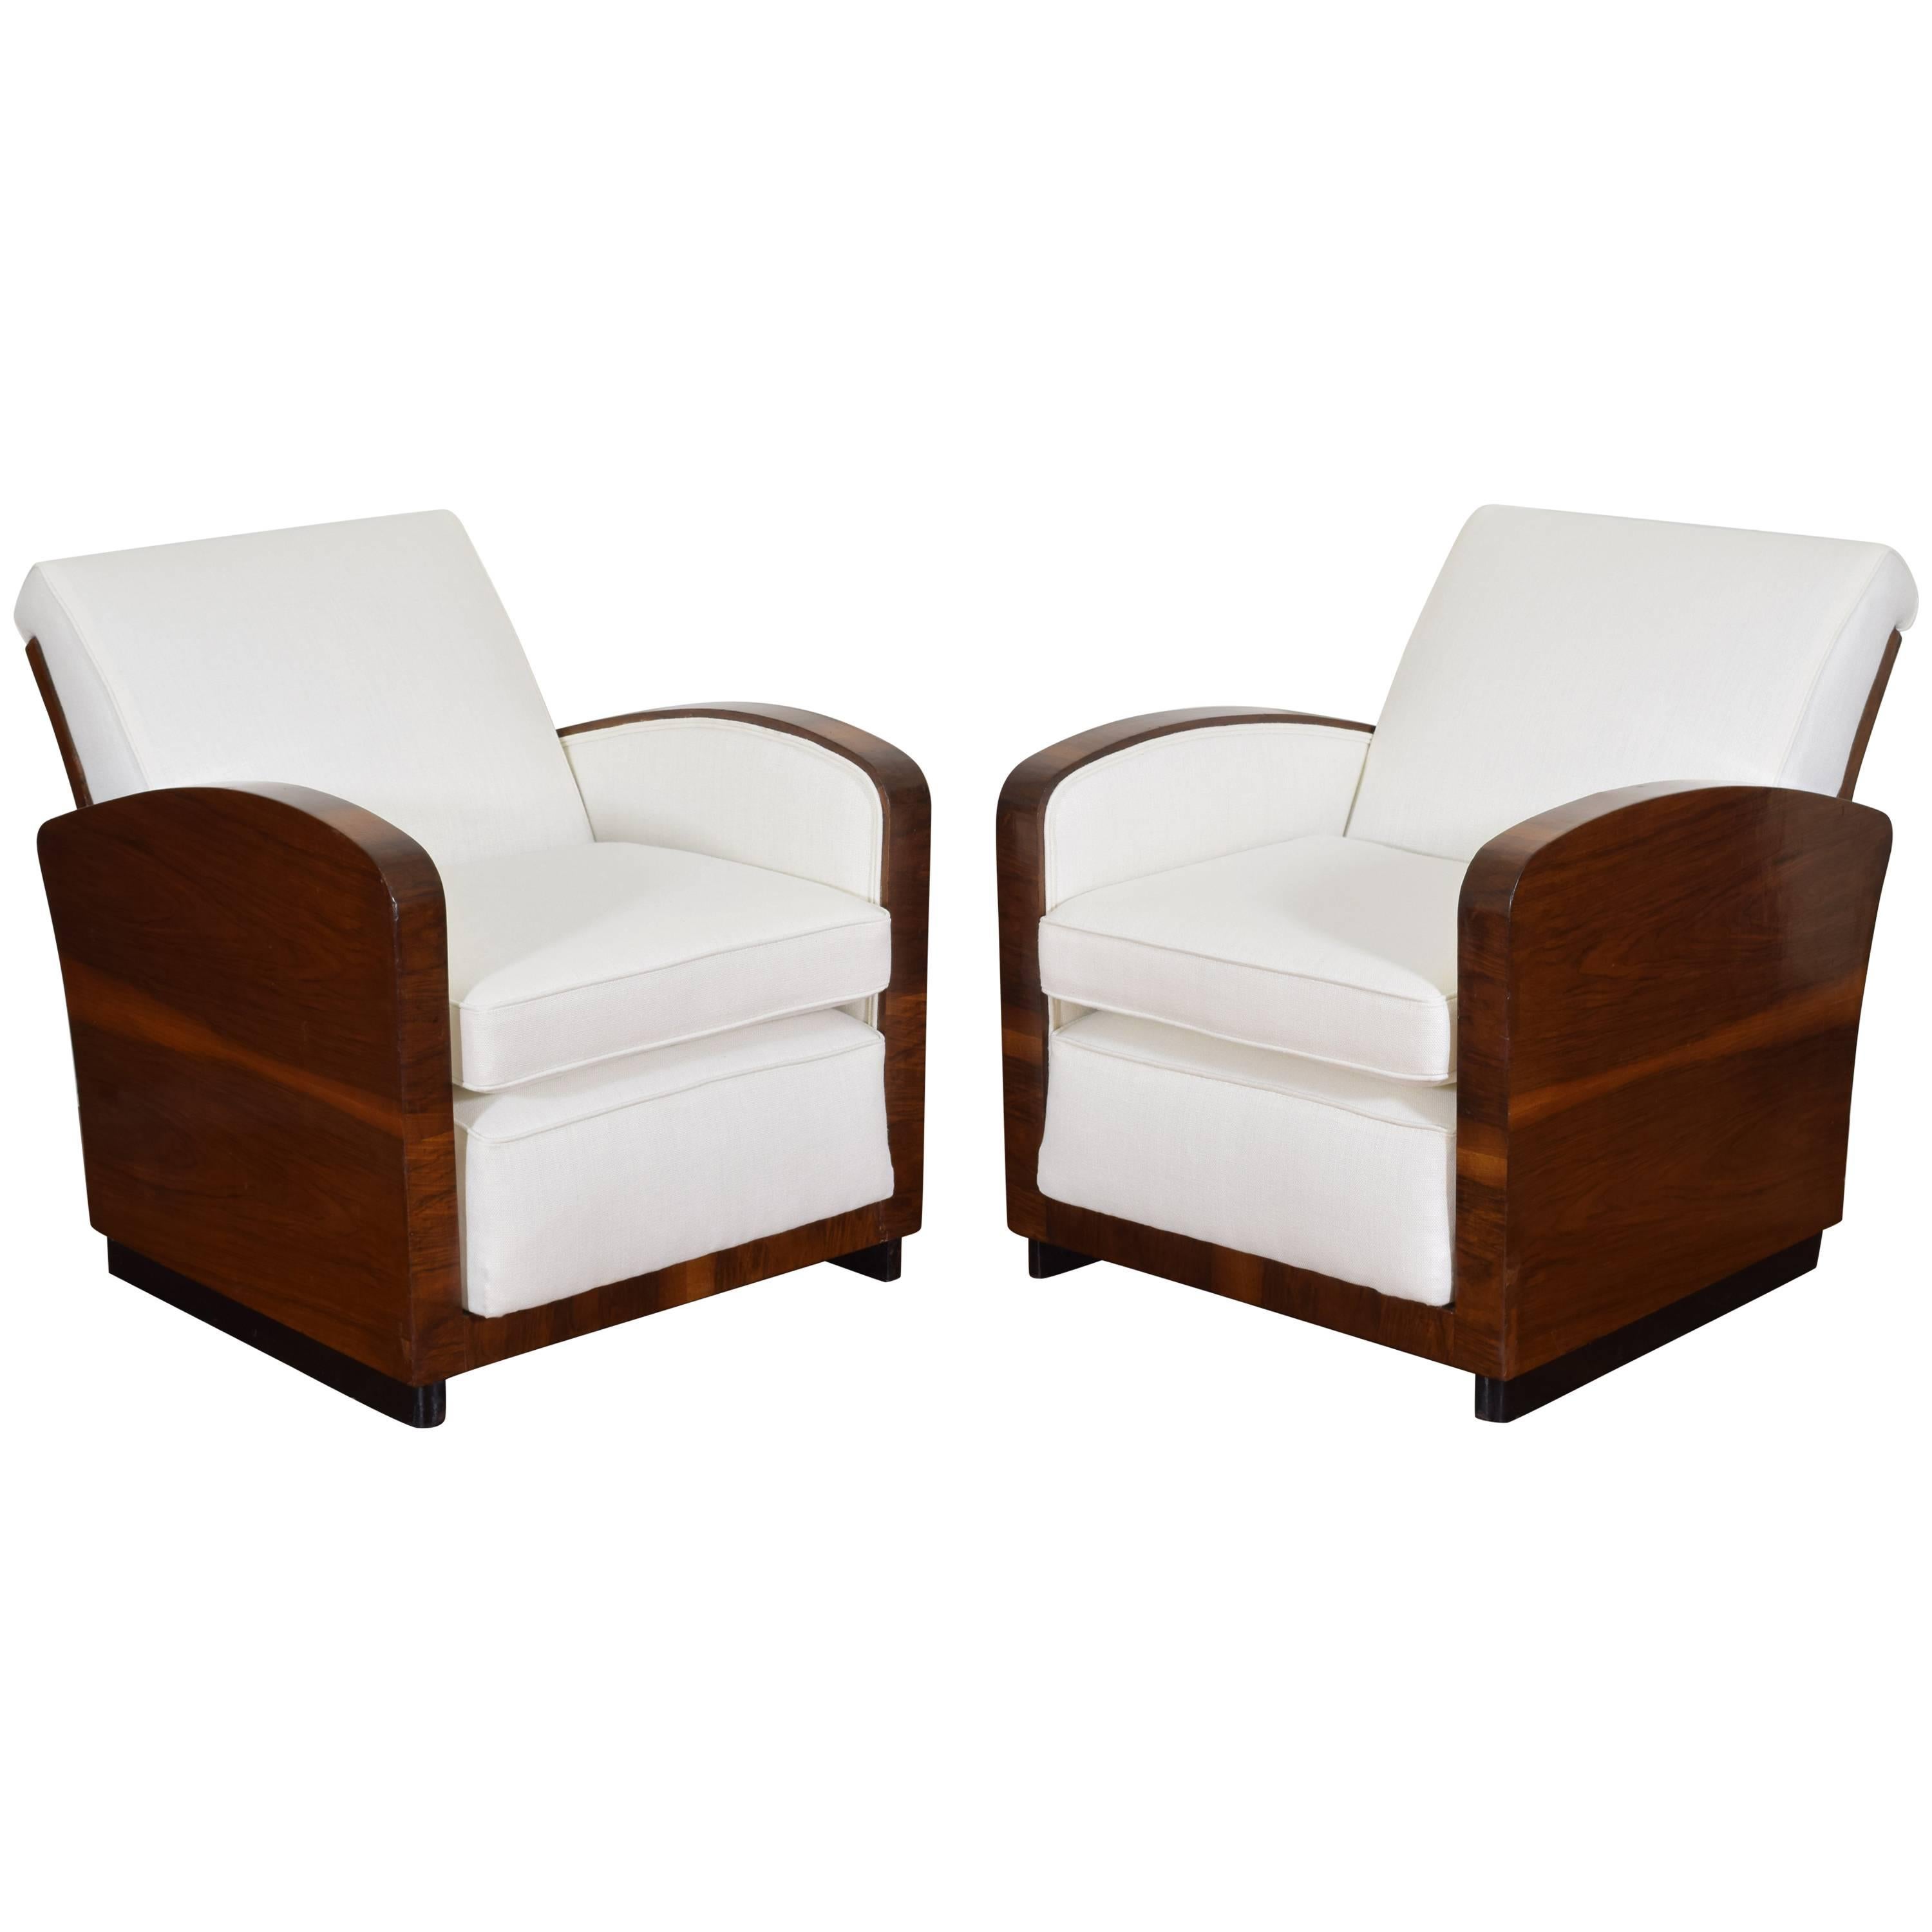 Pair of Italian Art Deco Walnut Veneer and Upholstered Club Chairs, 20th Century